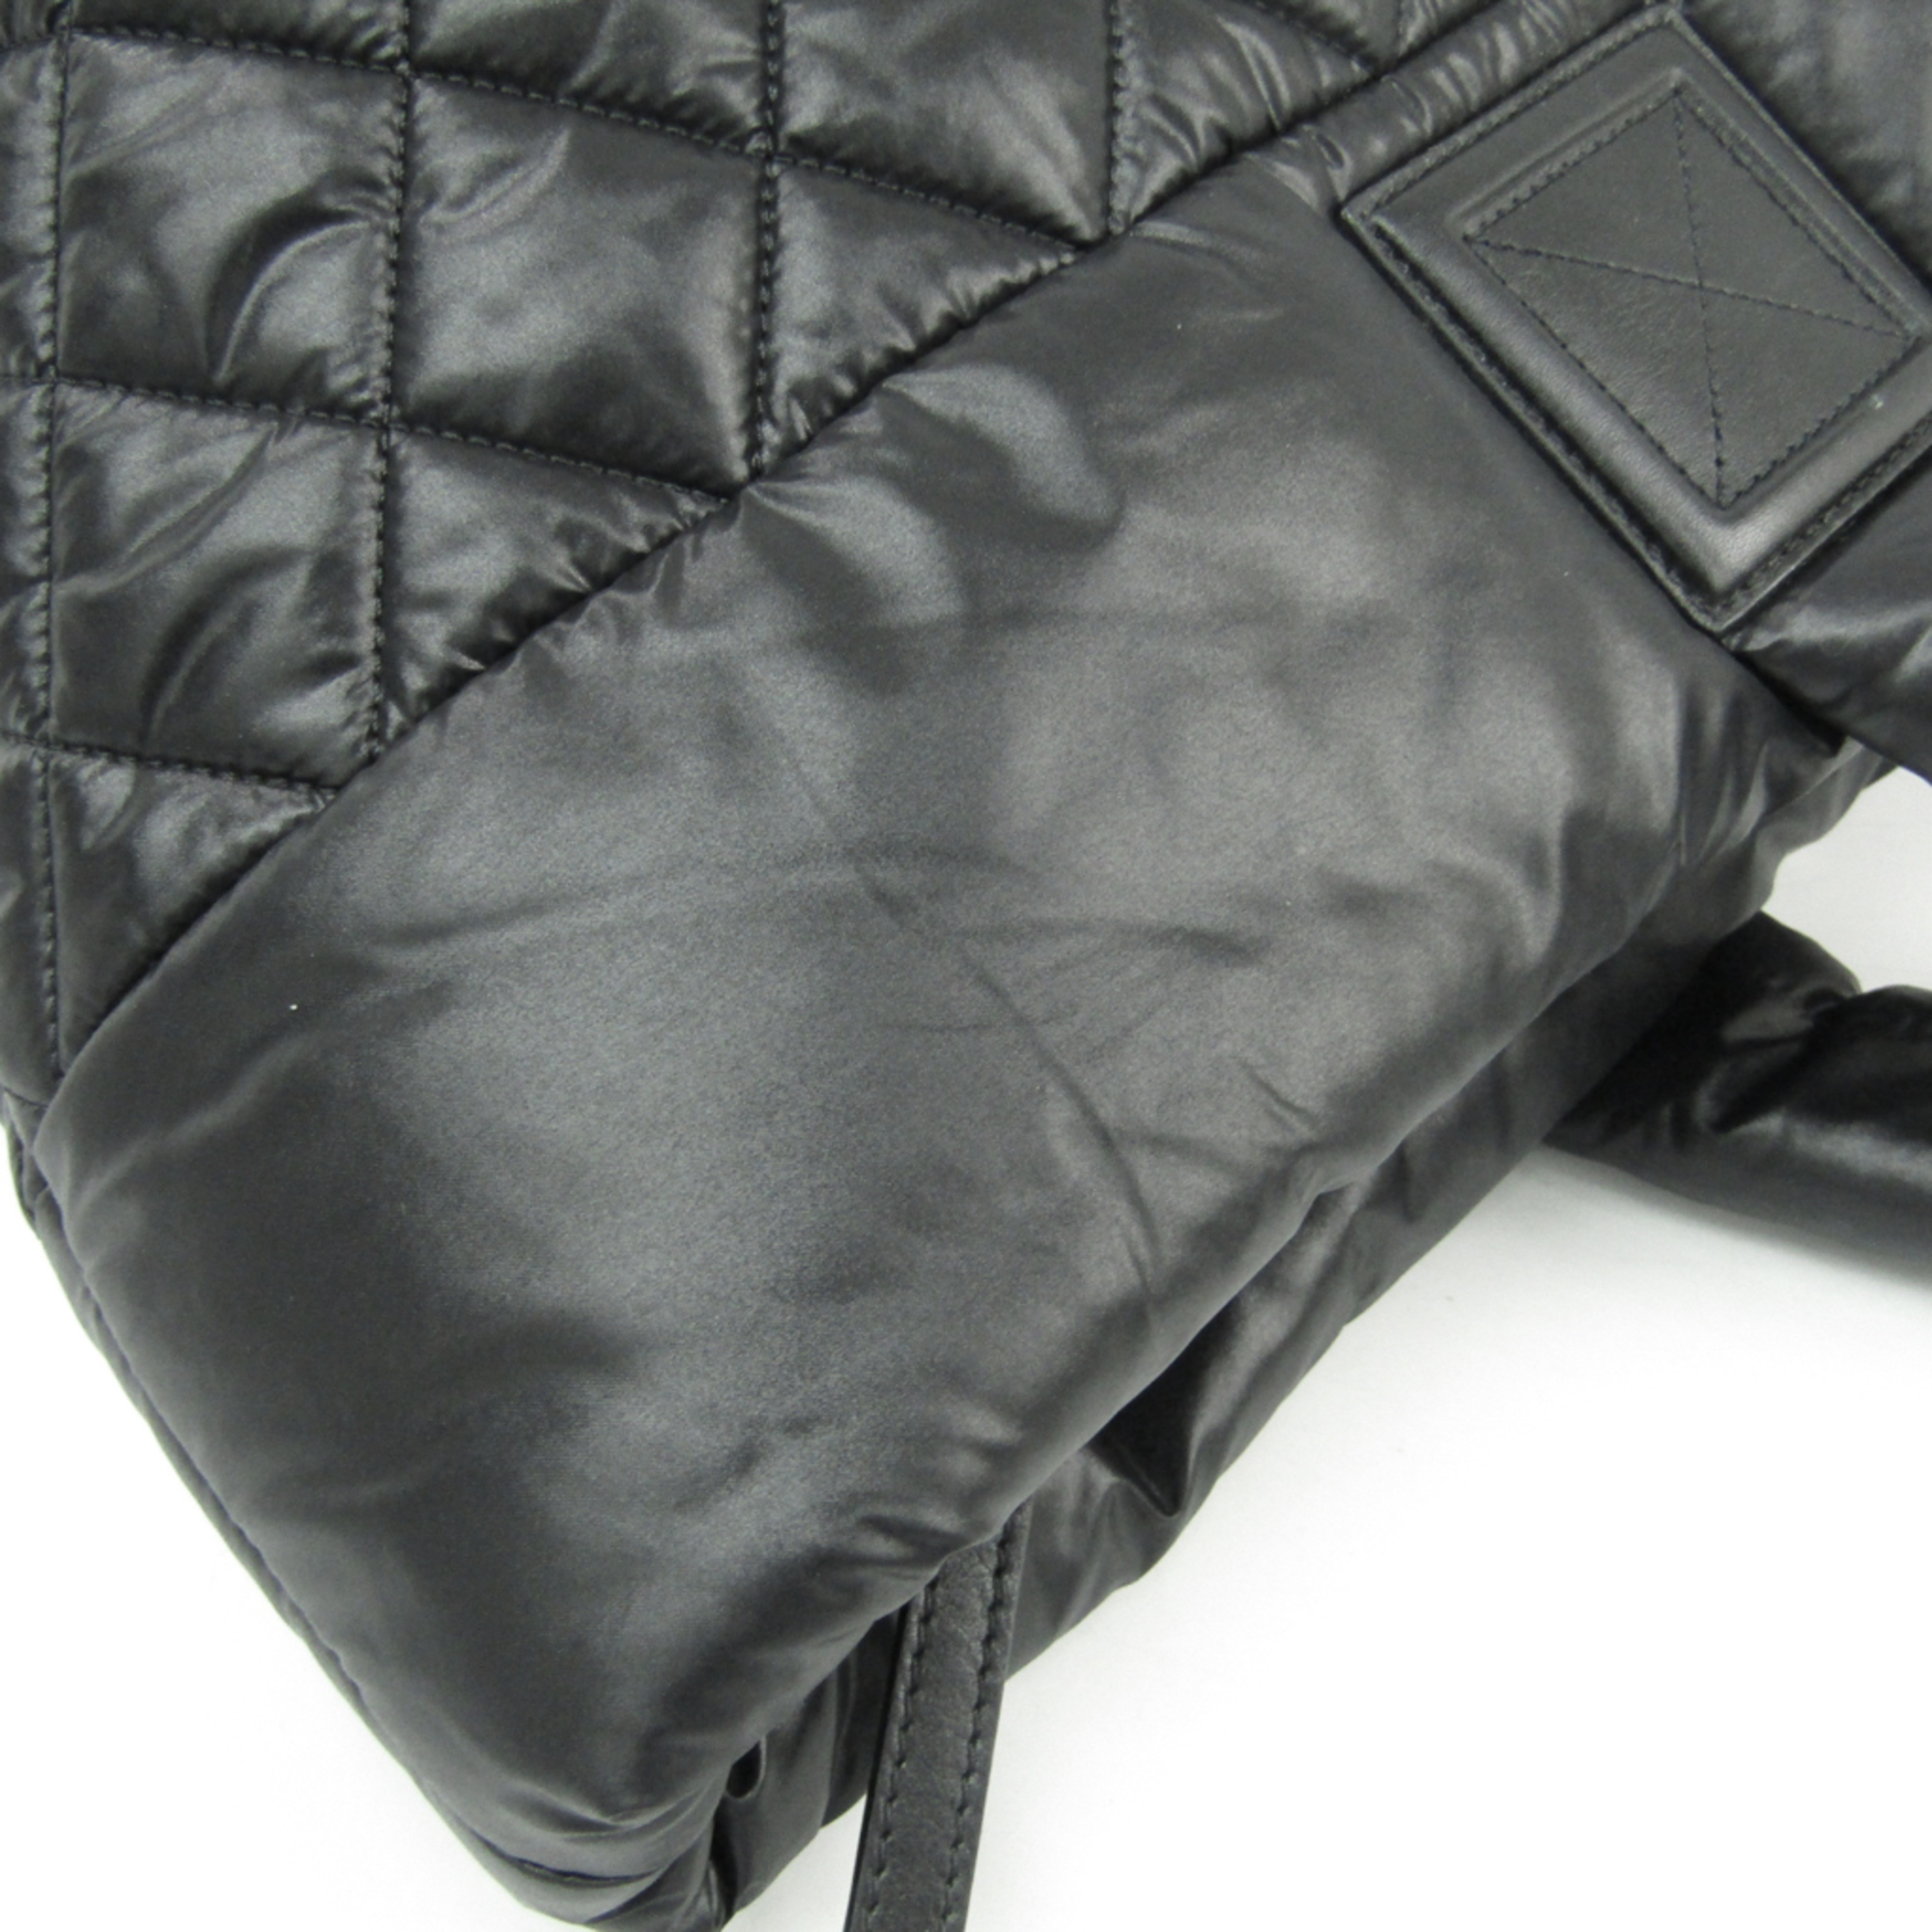 Chanel Coco Cocoon MM A48611 Women's Nylon Tote Bag Black